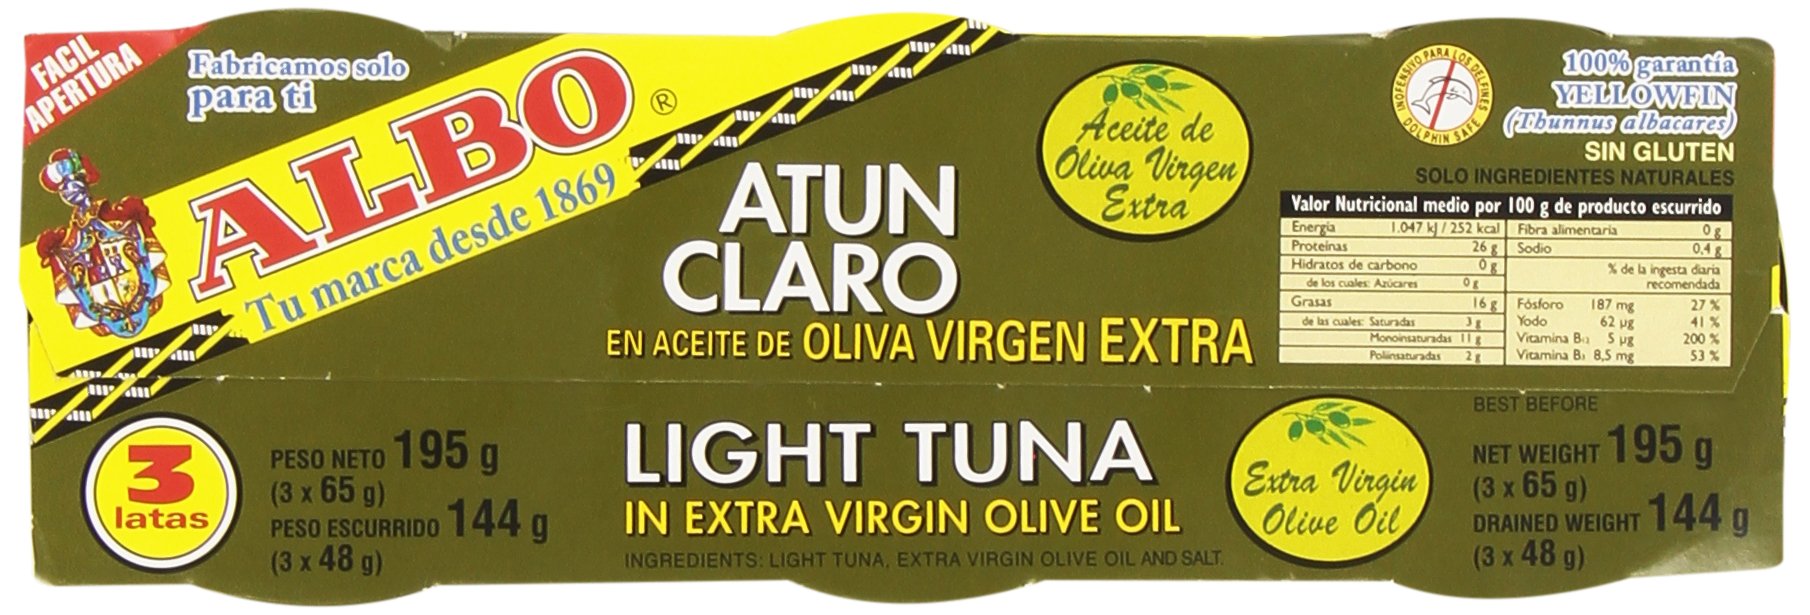 ATUN CLARO ACEITE OLIVA ALBO 3x65g.